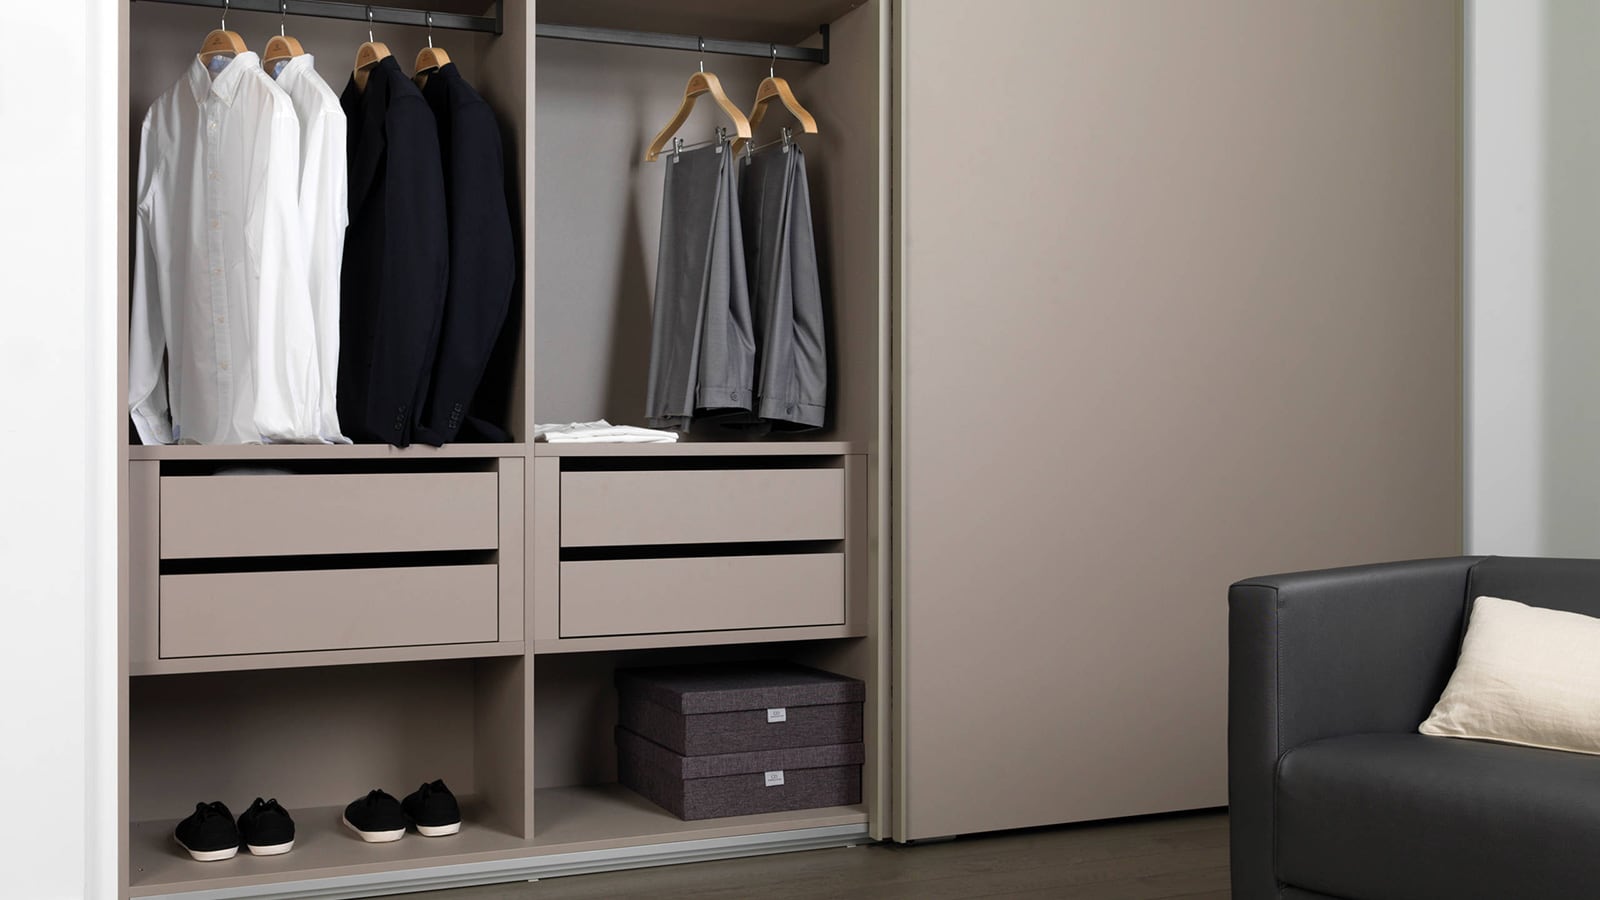 Tips for organising wardrobes